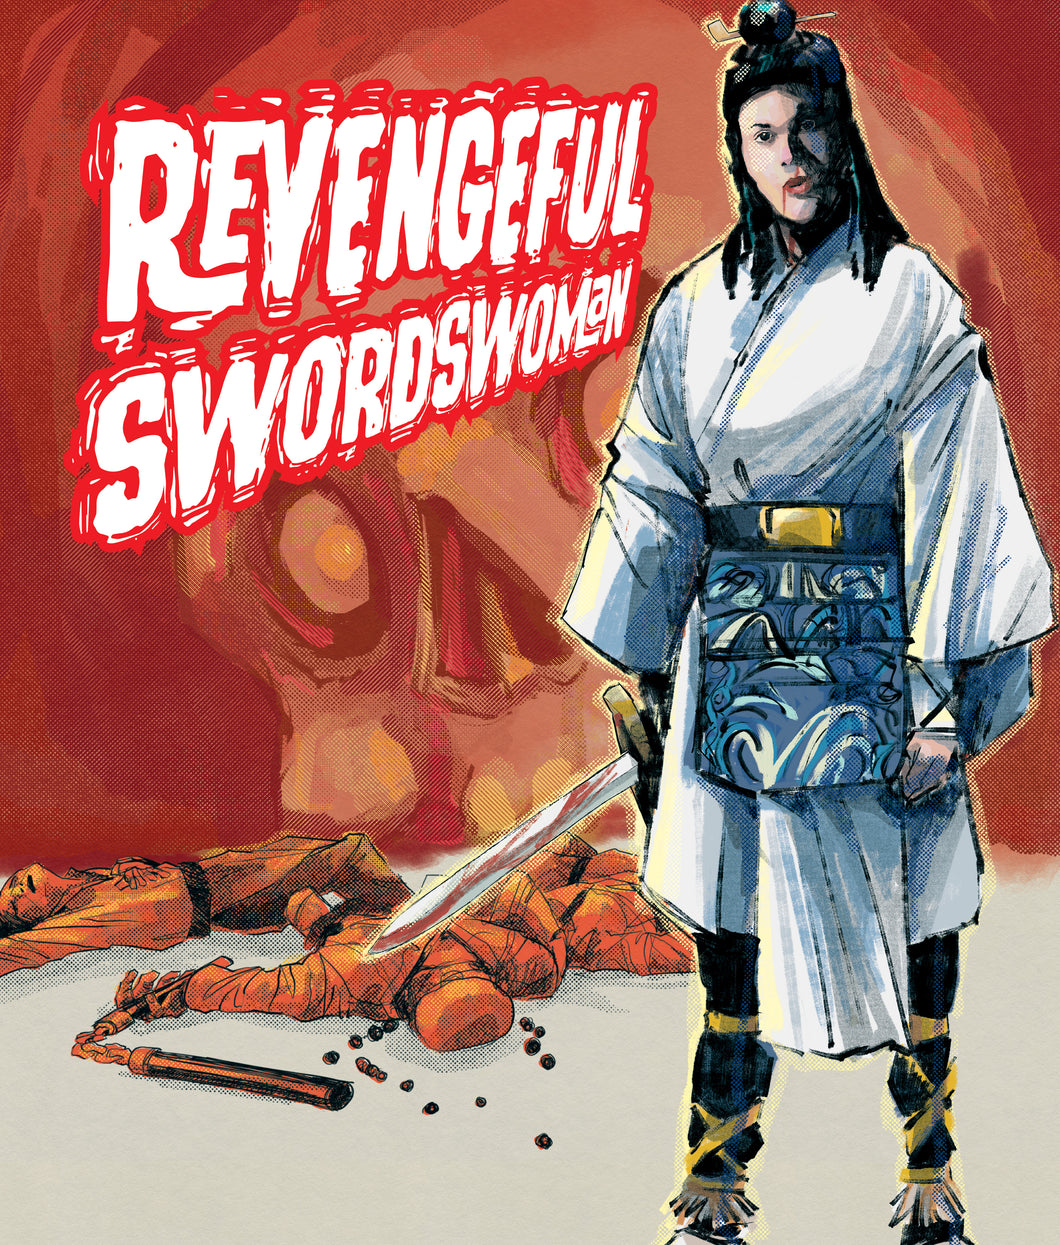 Blu-ray: Revengeful Swordswoman